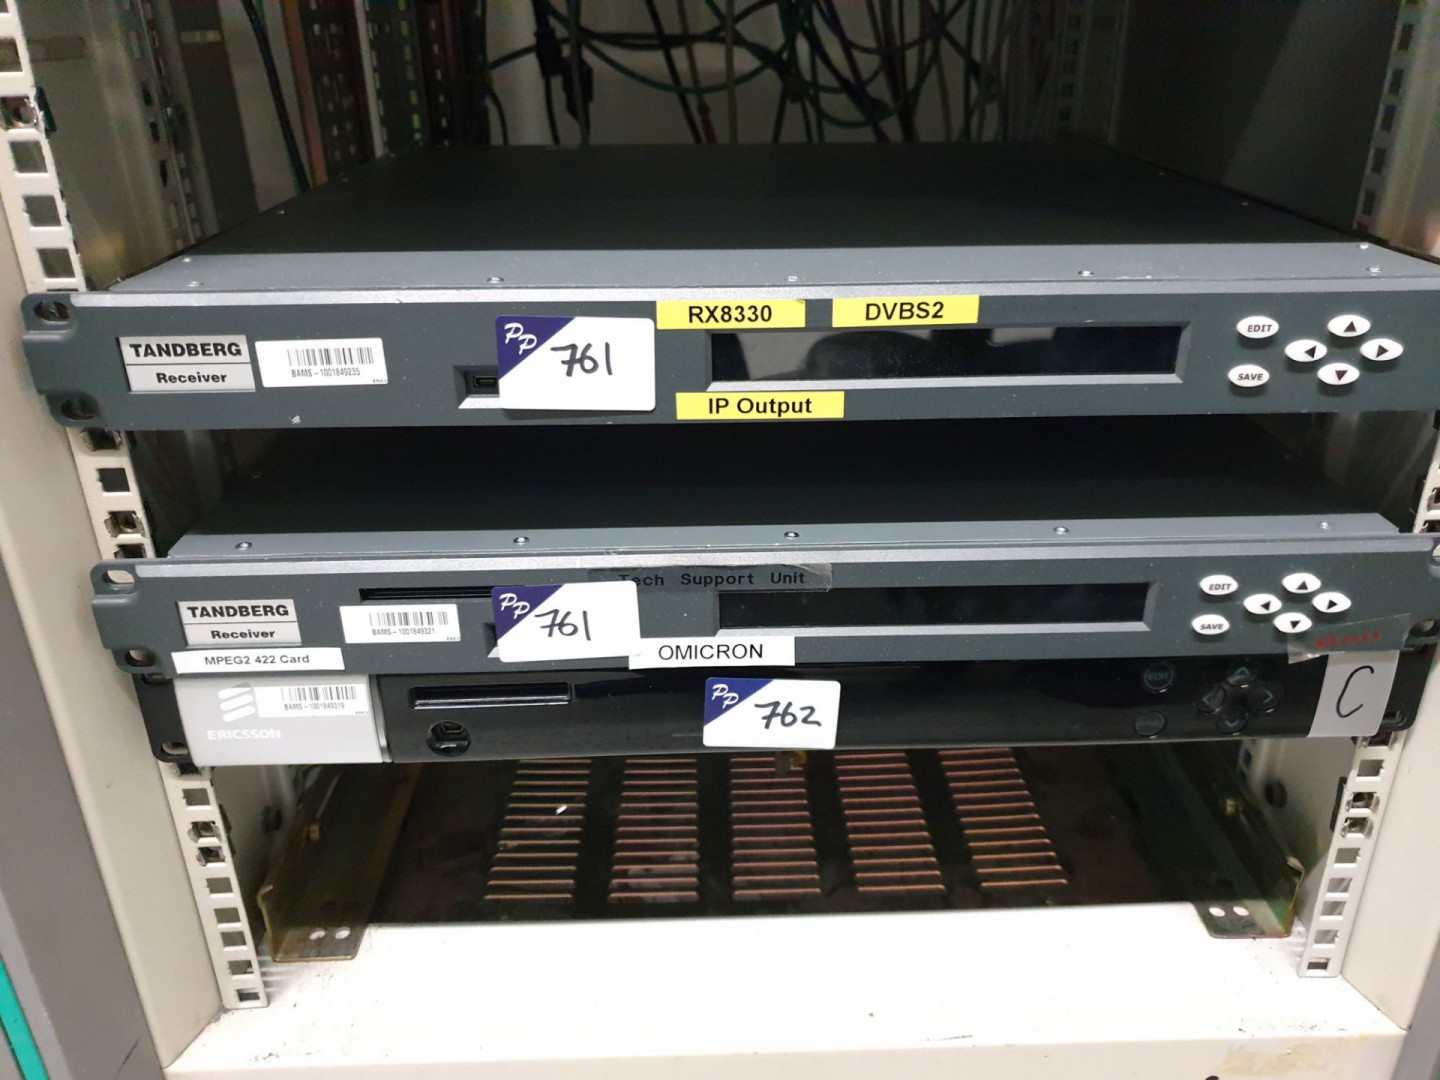 2x Tandberg RX8200 receivers